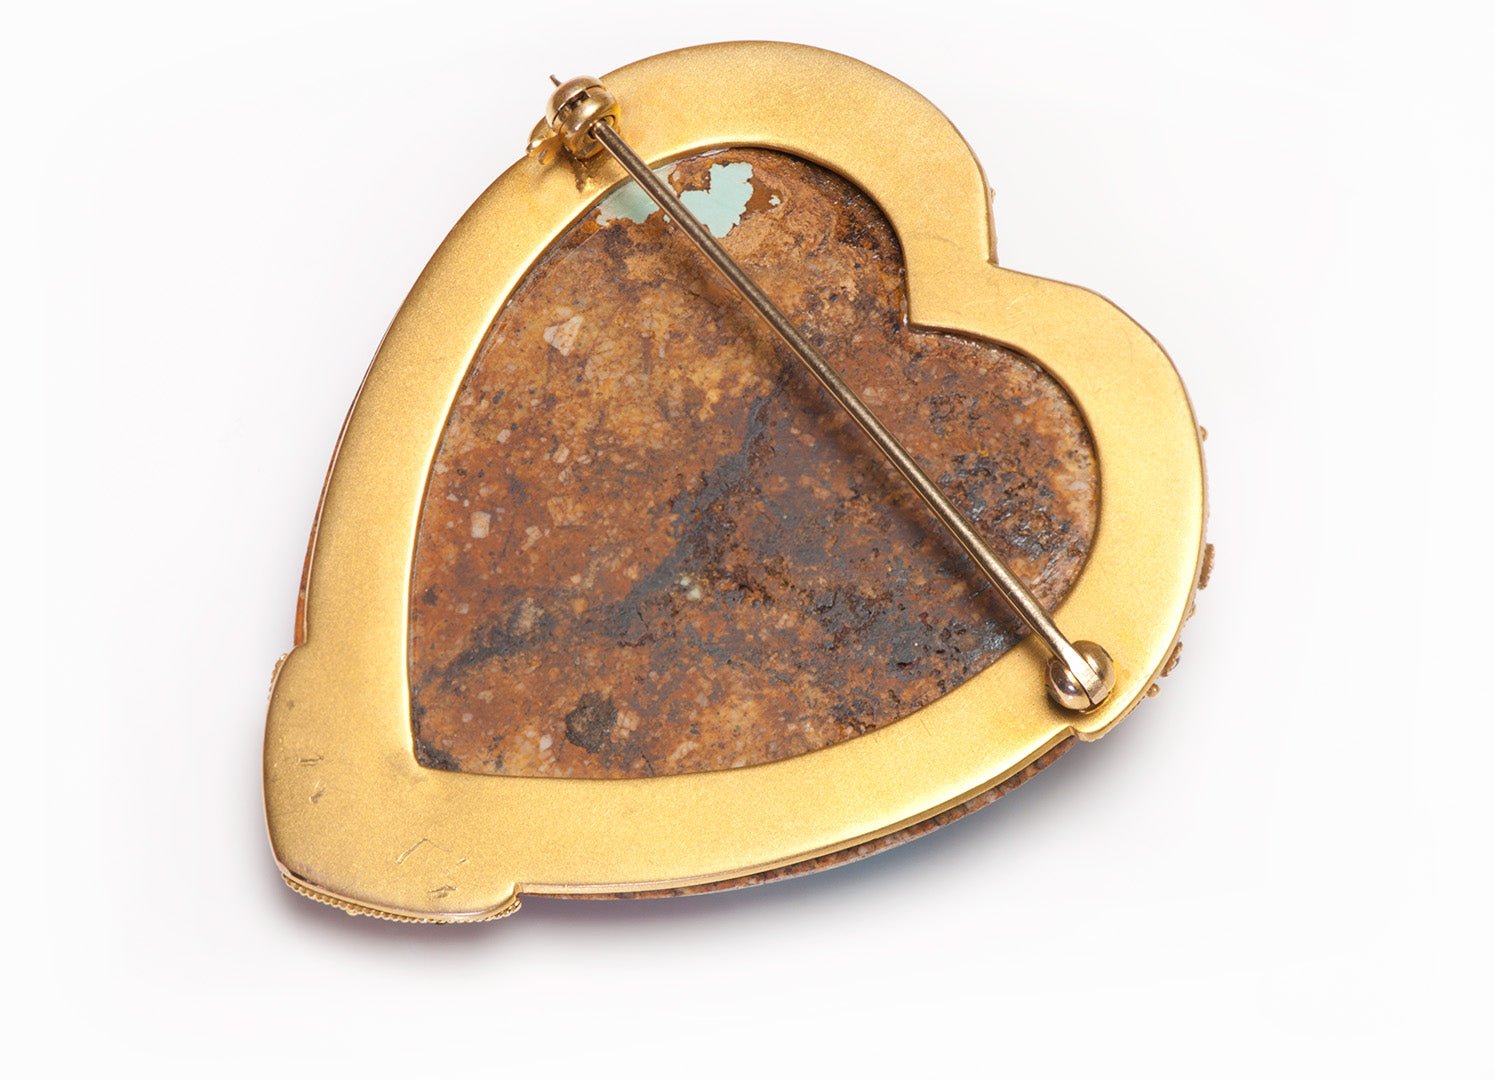 Antique Specimen Turquoise Gold Diamond Ruby Demantoid Heart Brooch